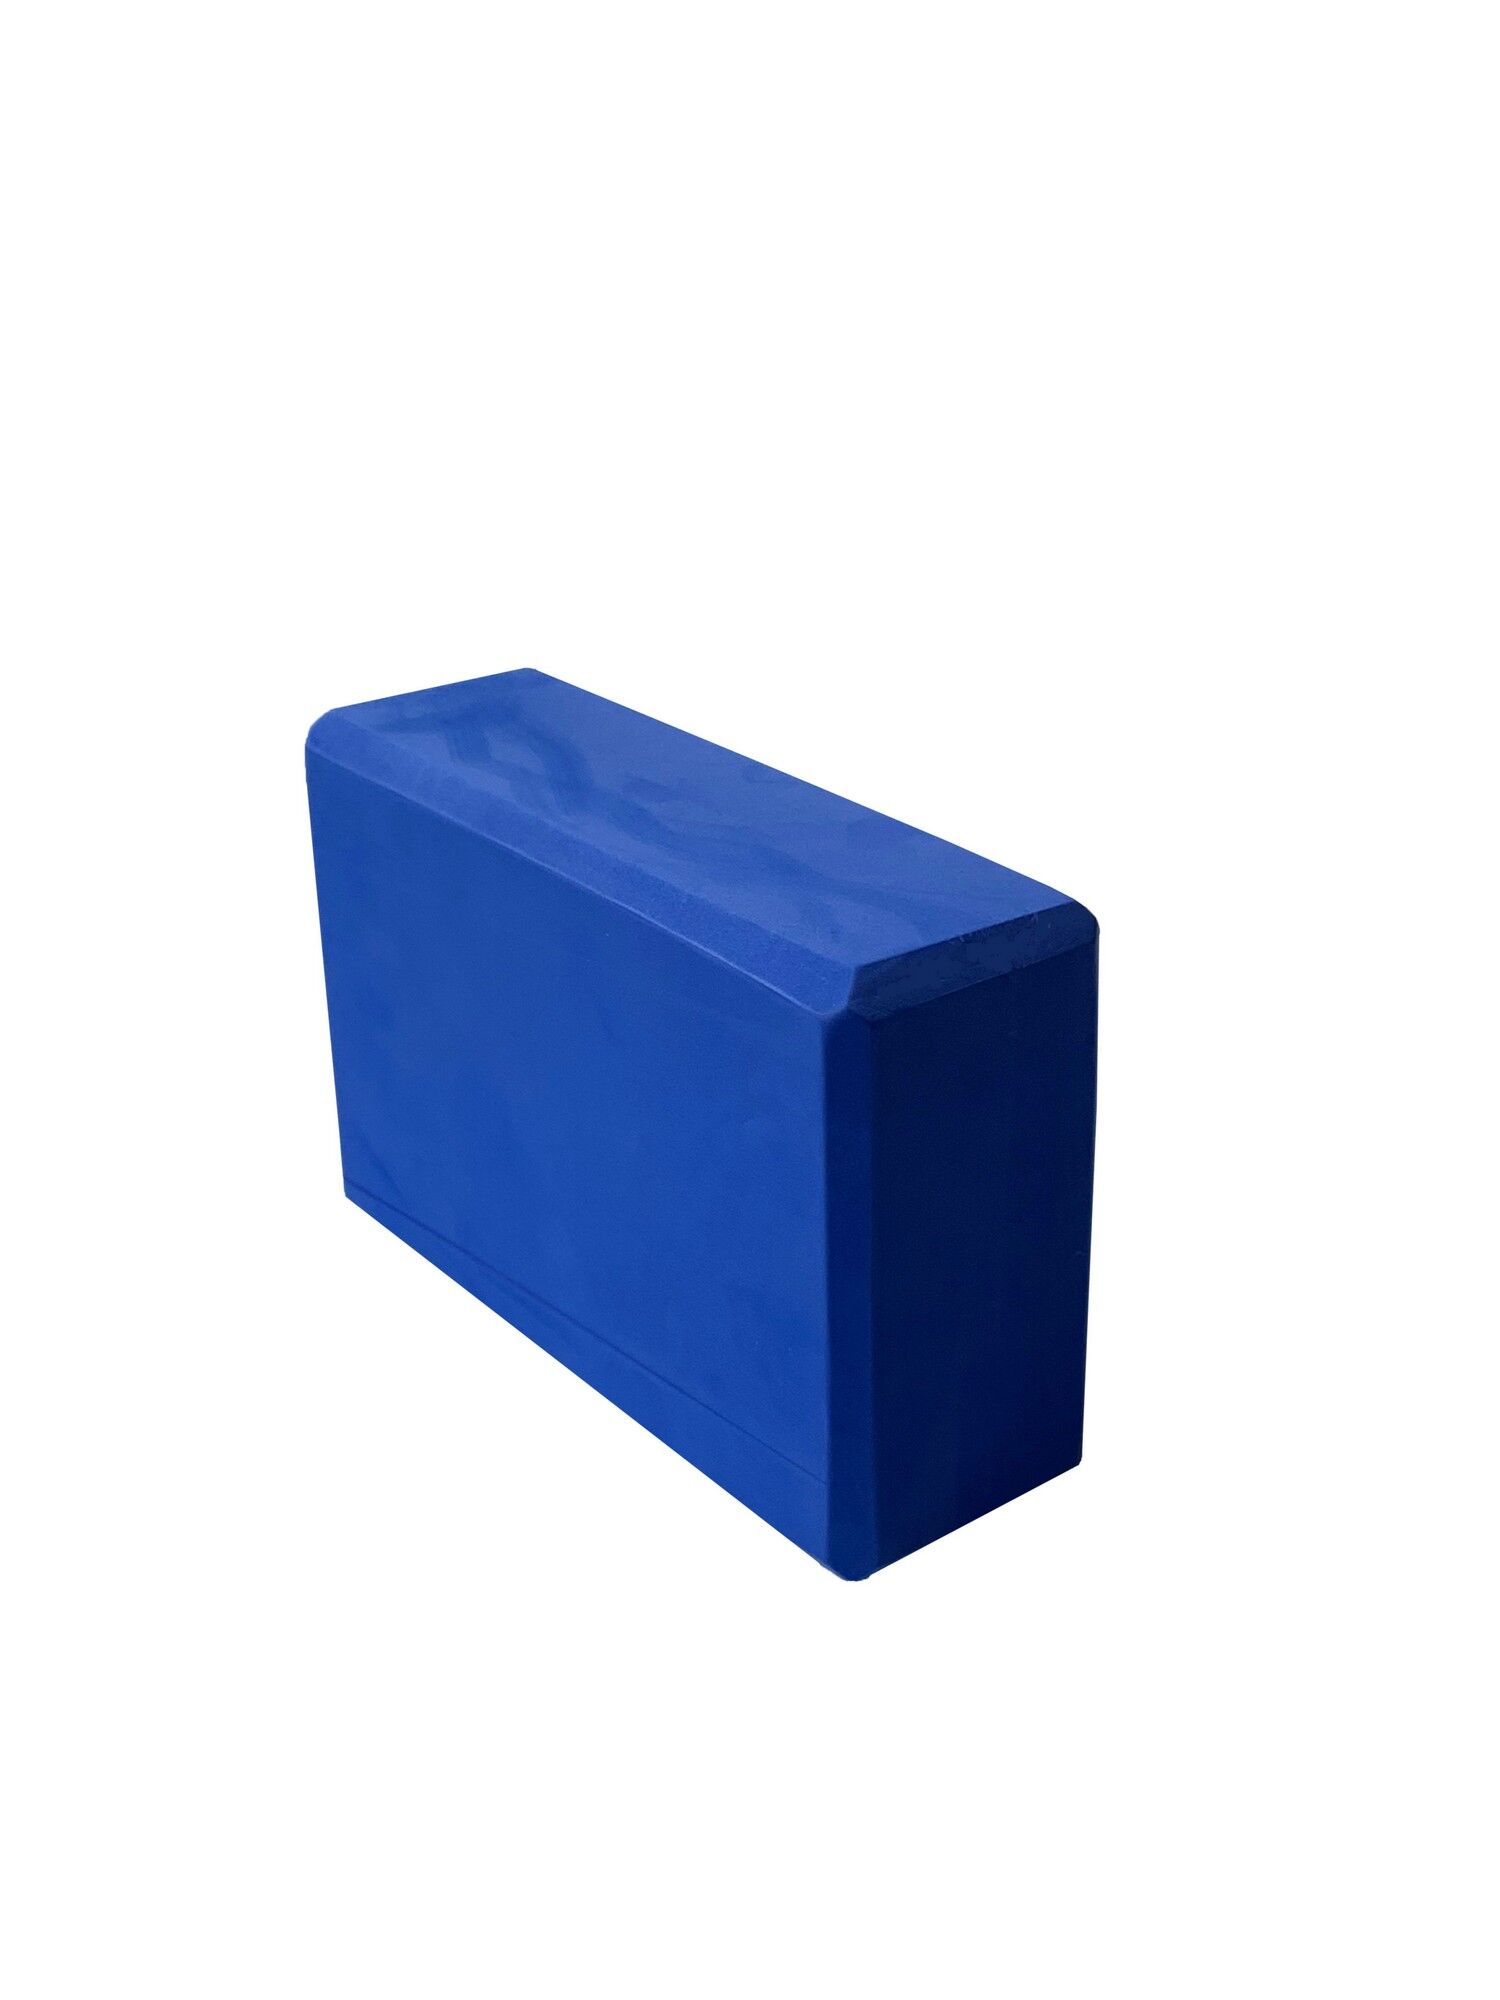 Йога блок полумягкий (синий) 223х150х76мм., из вспененного ЭВА E39131-53 ST